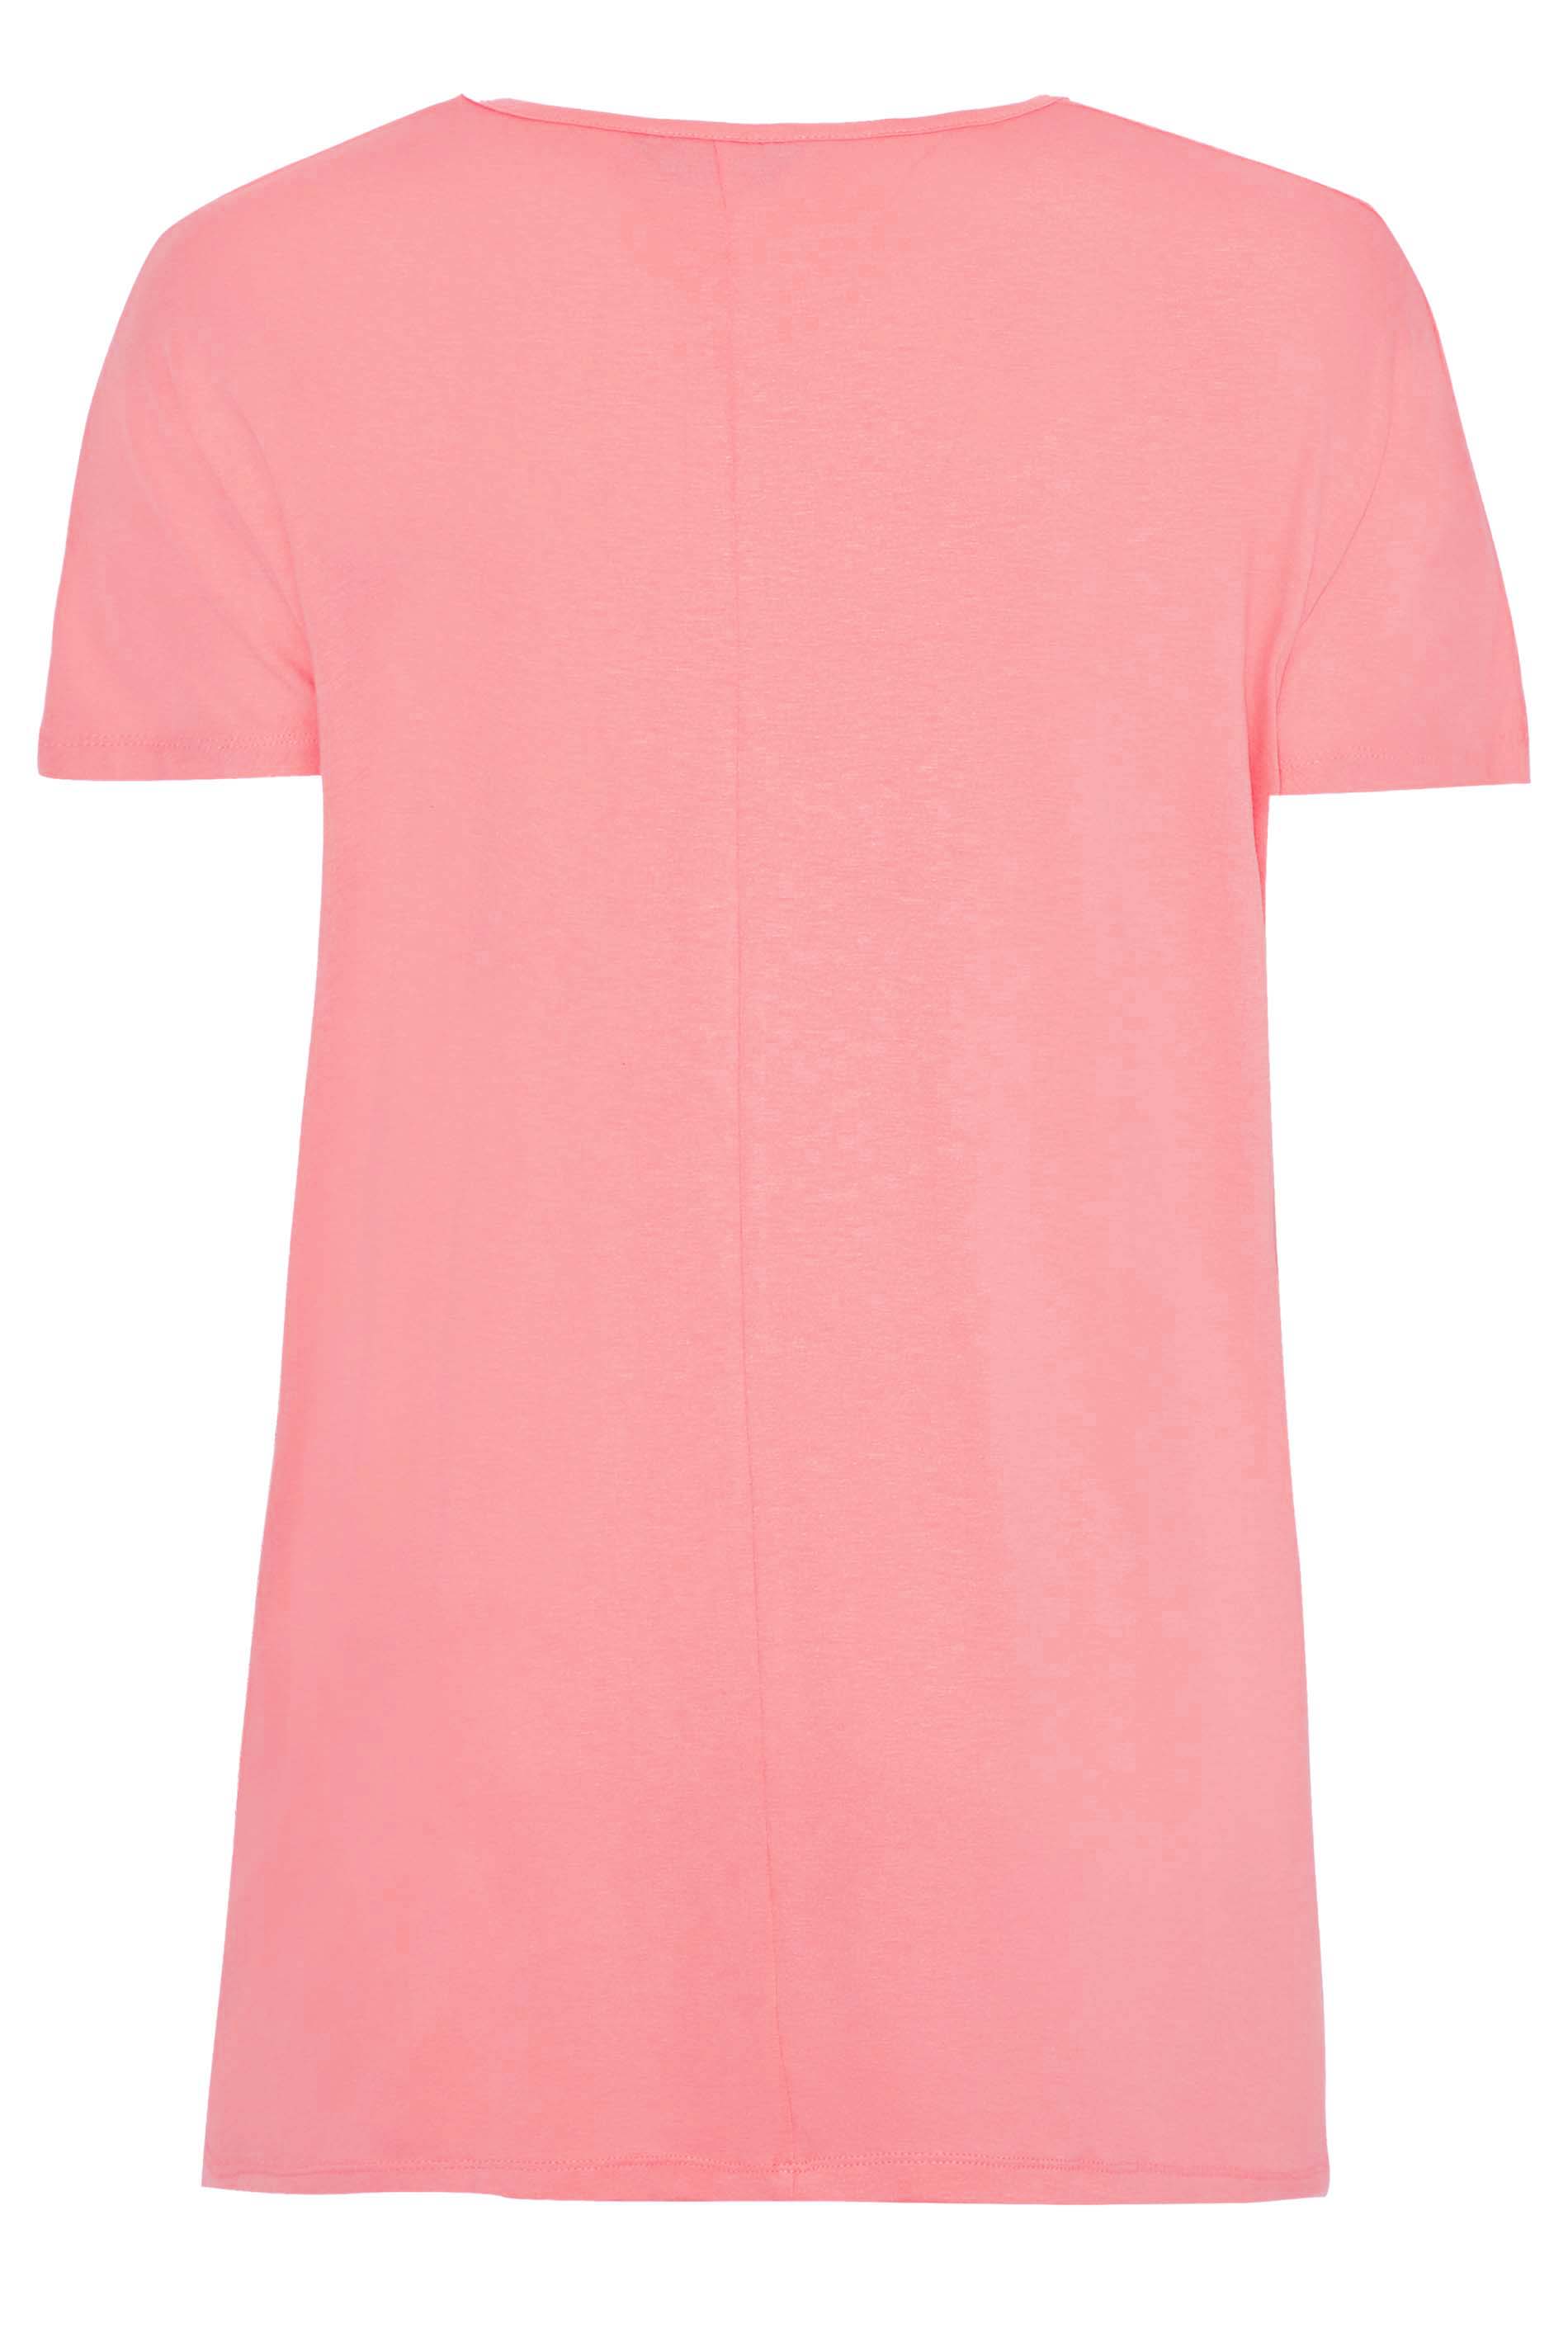 Grande taille  Tops Grande taille  T-Shirts | T-Shirt Rose Design Papillon - HI32275